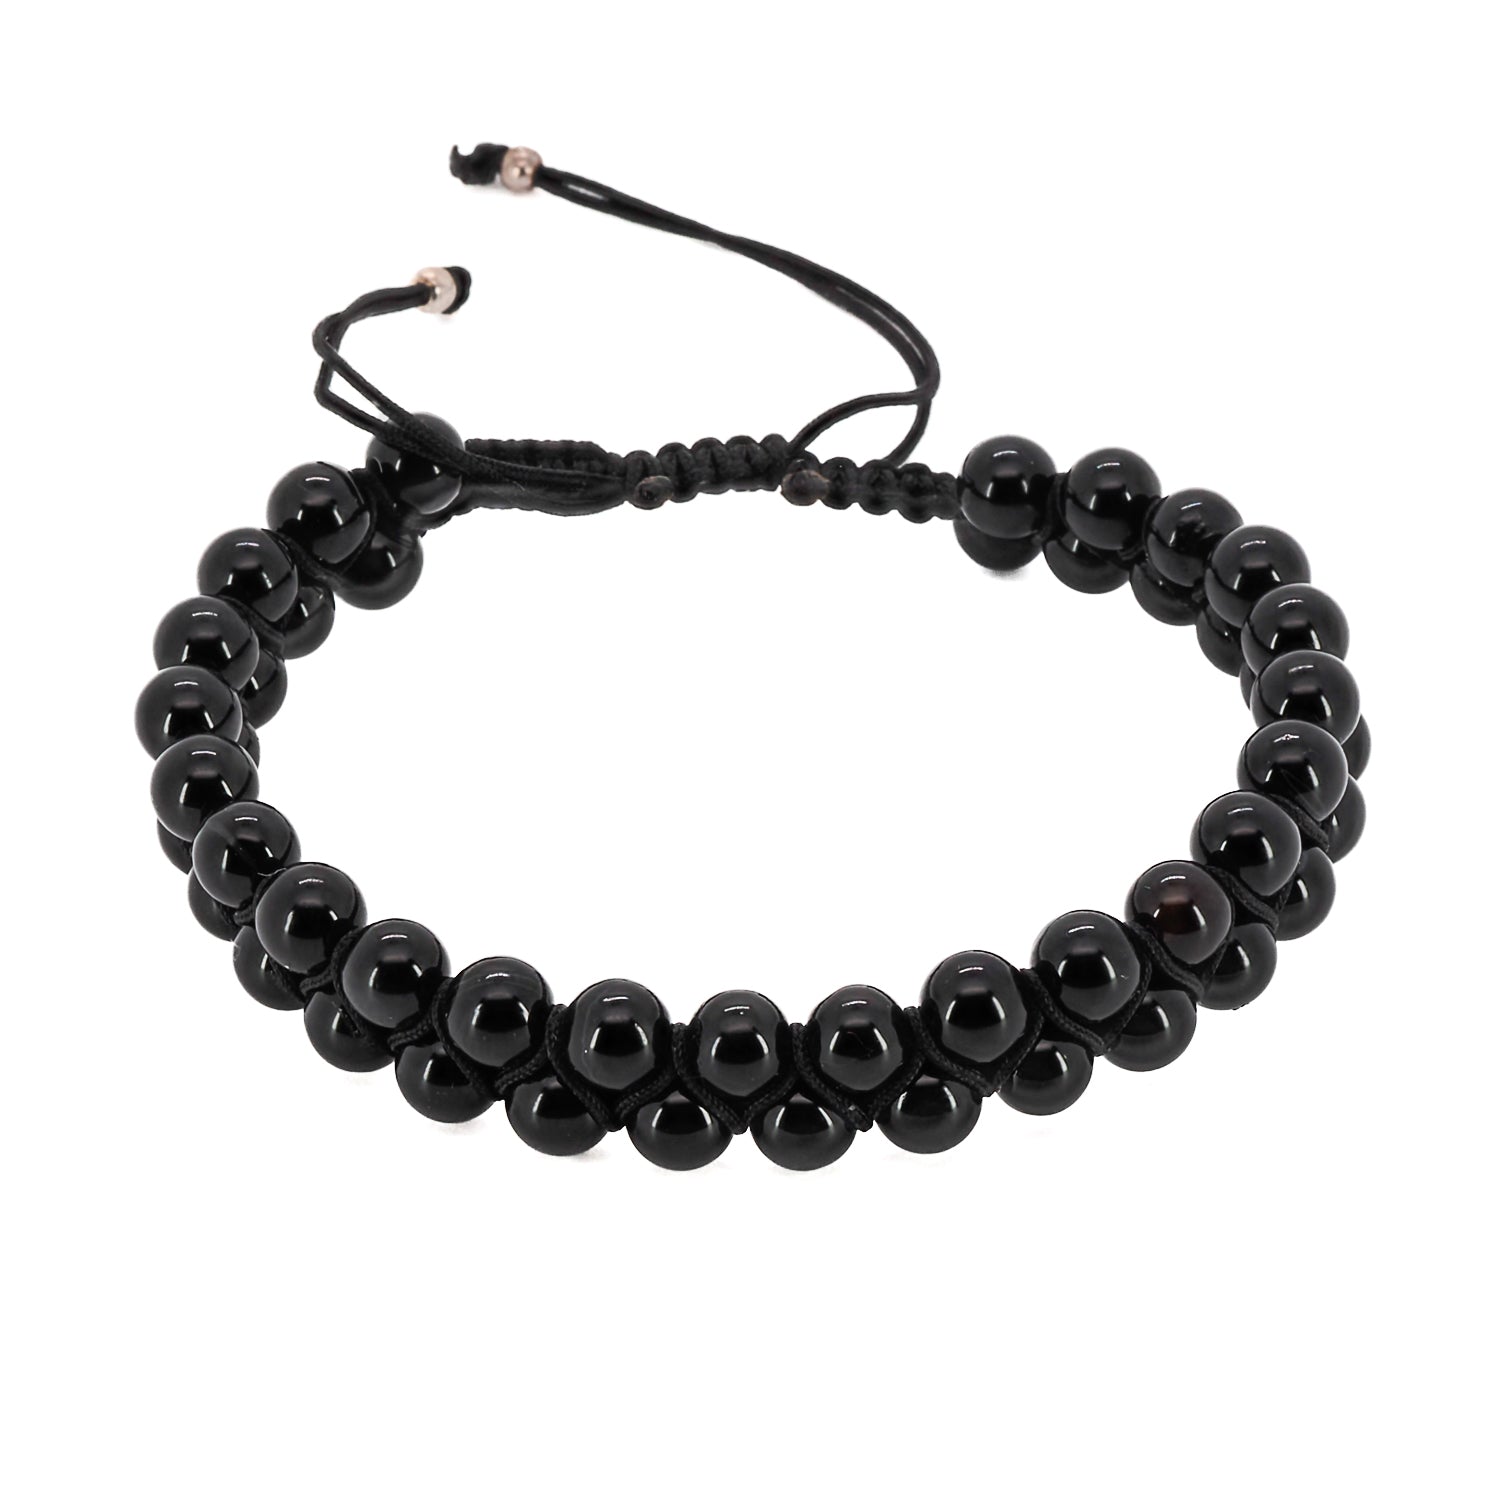 Close-up of Black Onyx Stone Beads on Self Control Bracelet